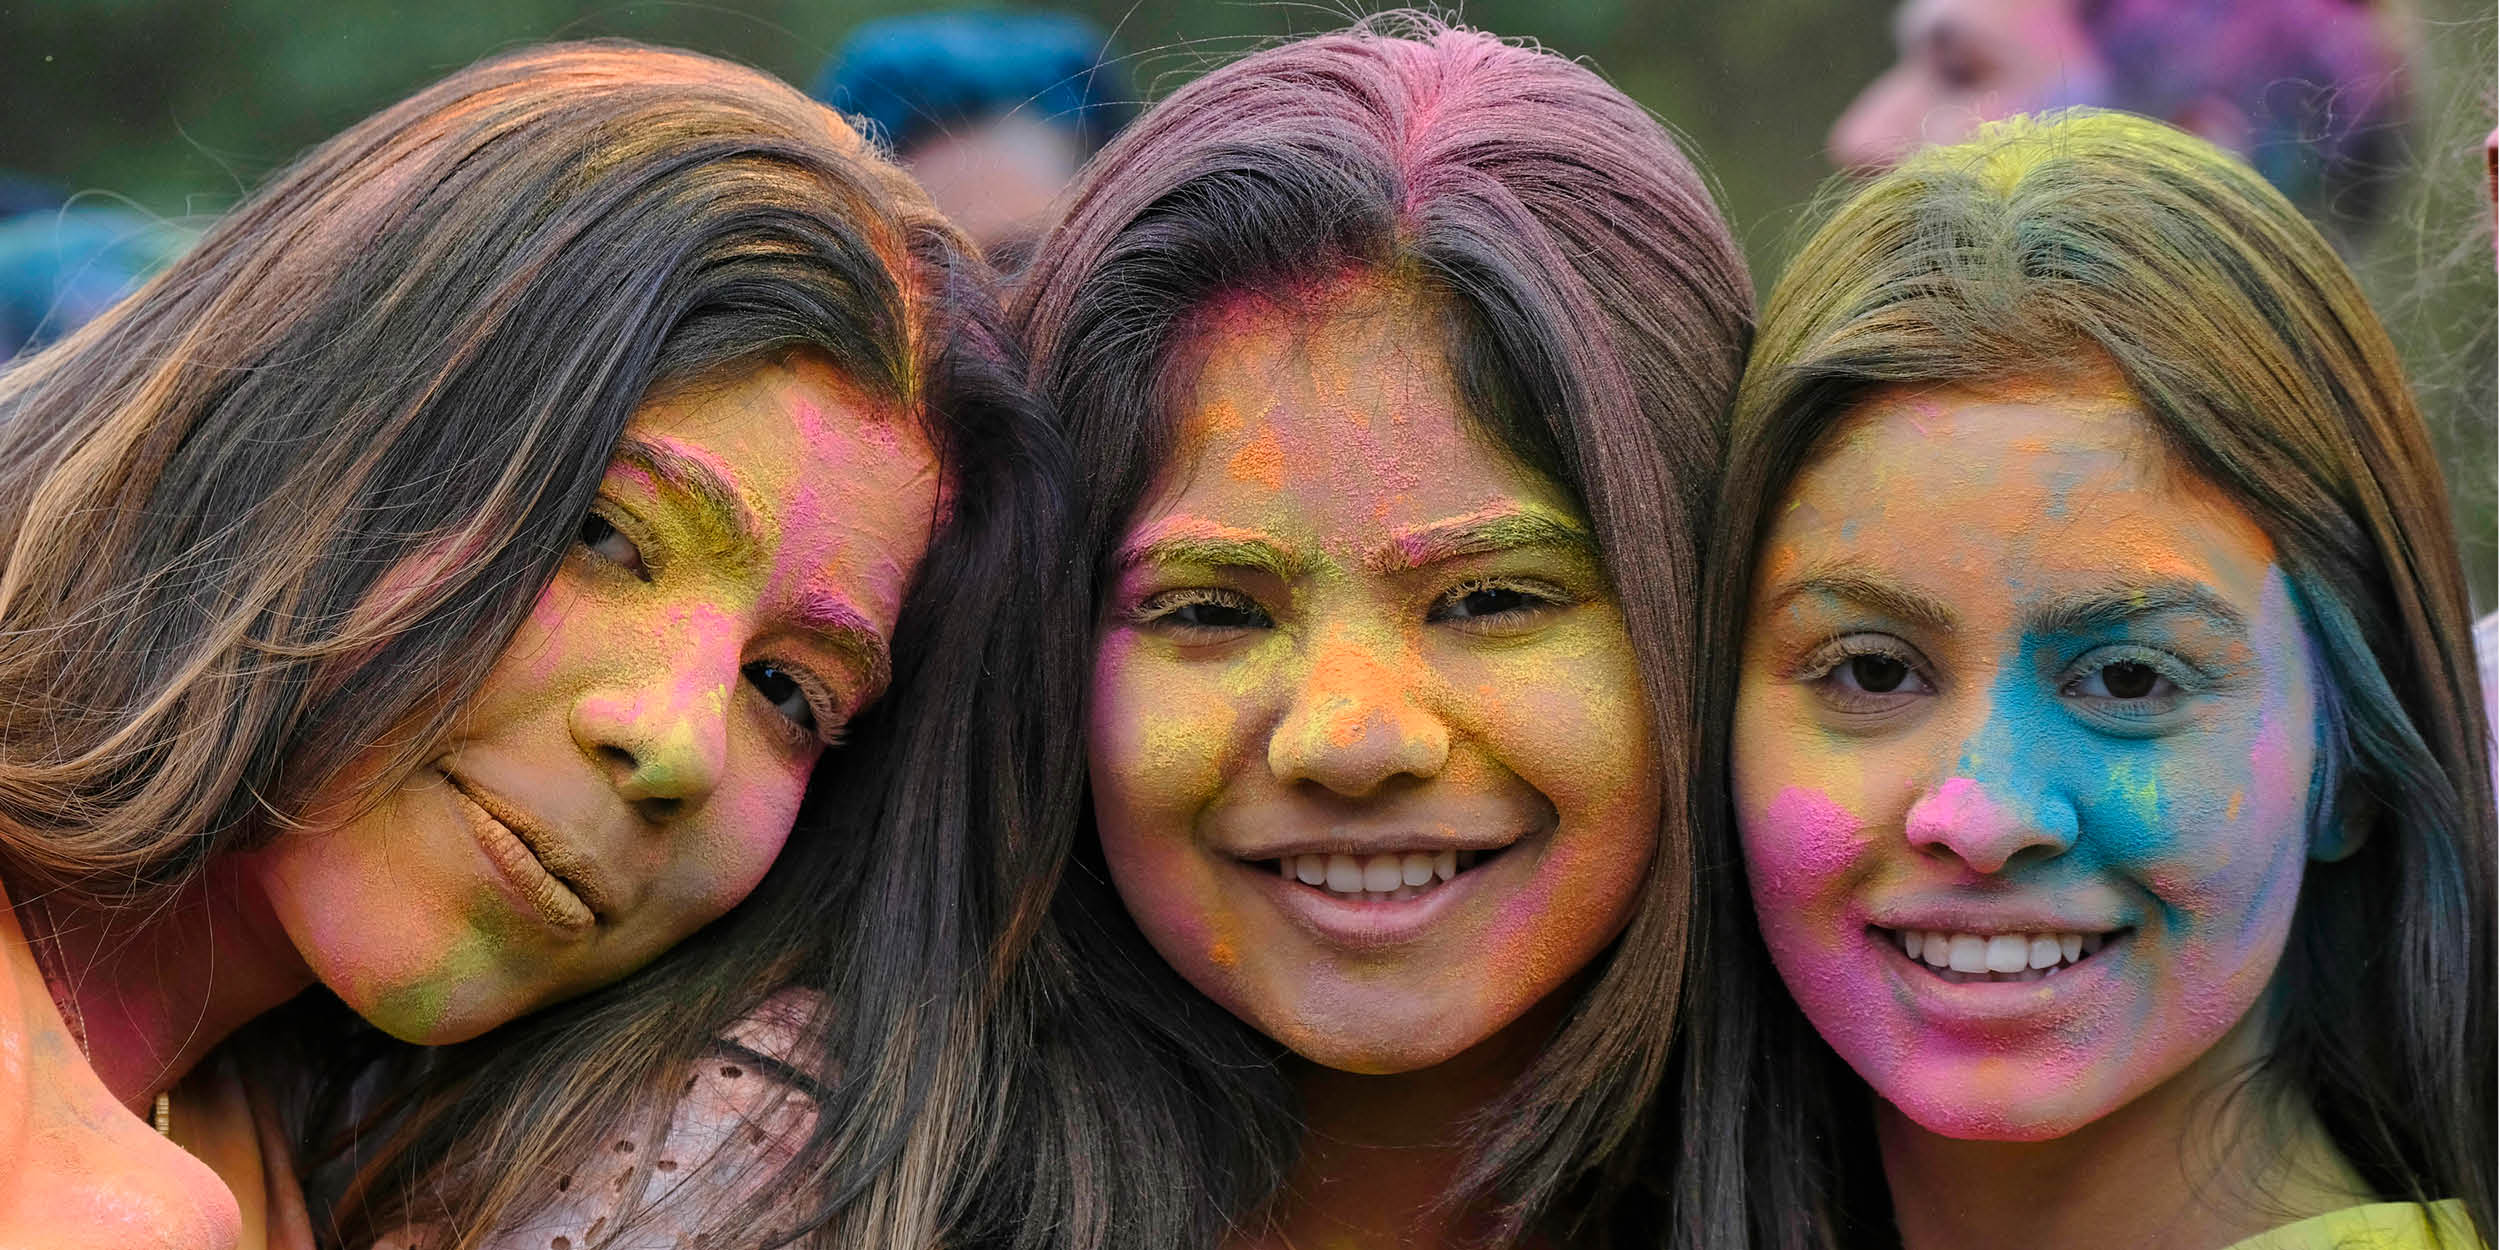 Three students celebrating Holi